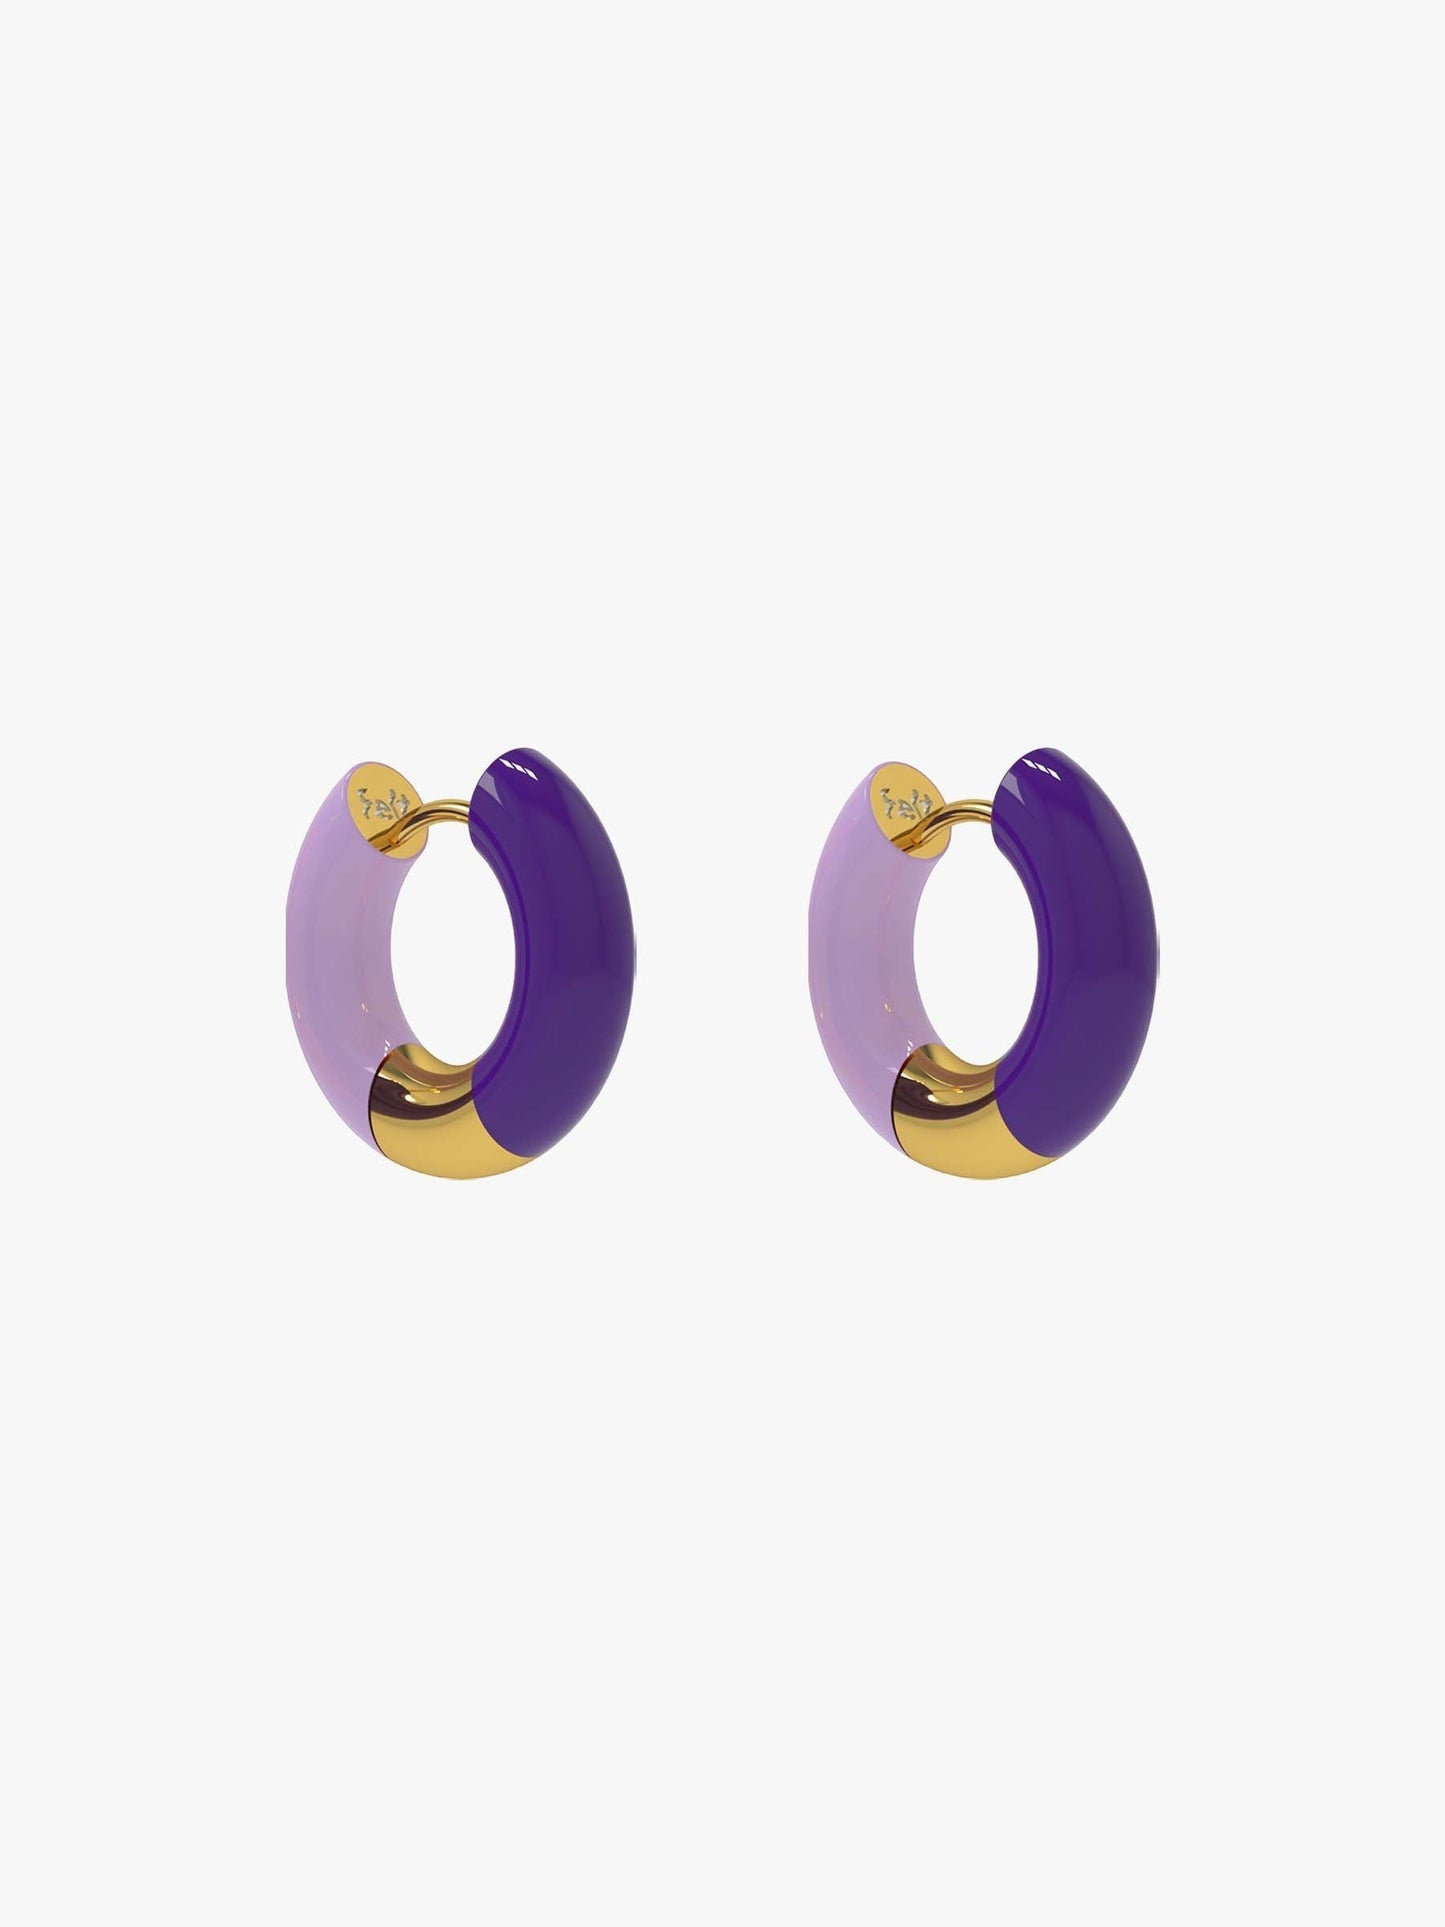 Ora Pio pink purple earring (pair)